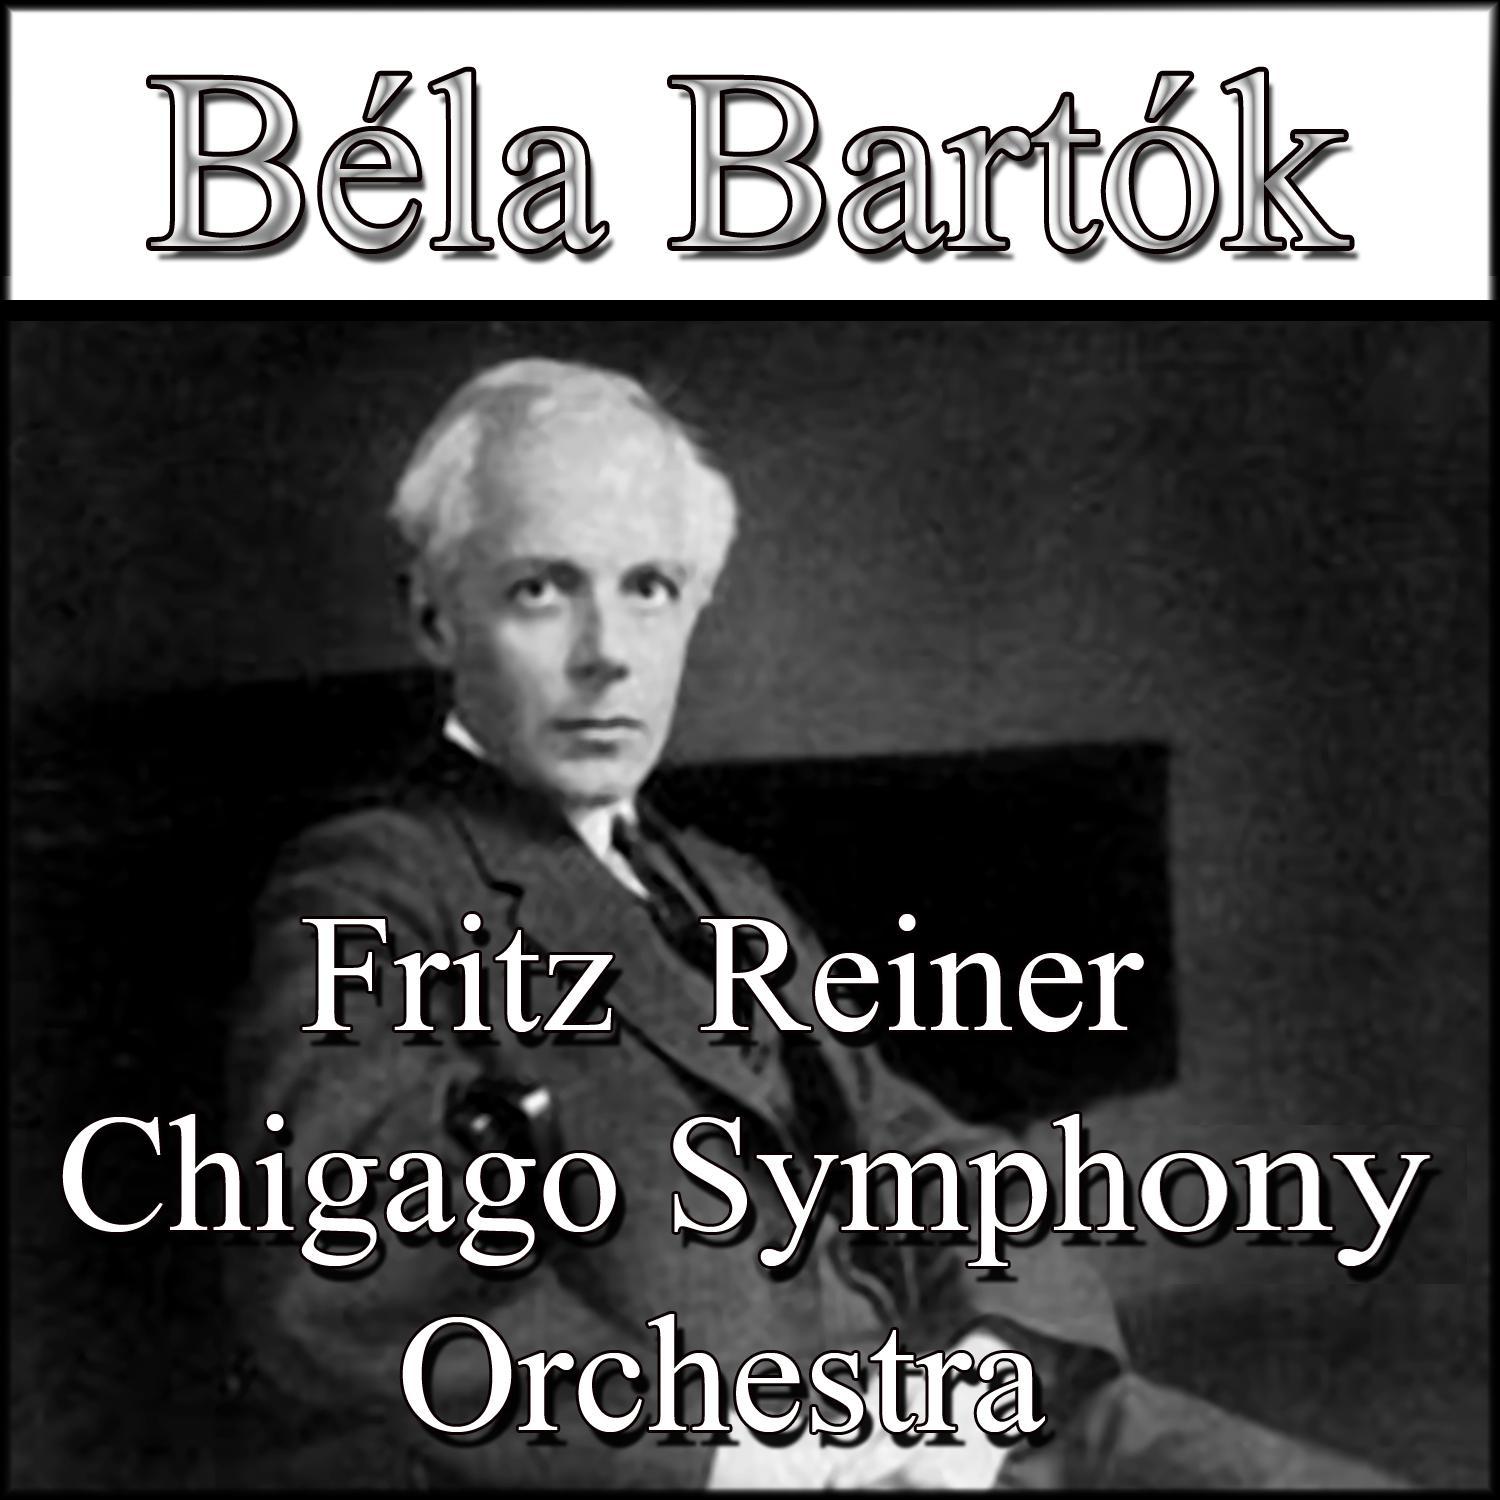 Béla Bartók's Concerto For Orchestra